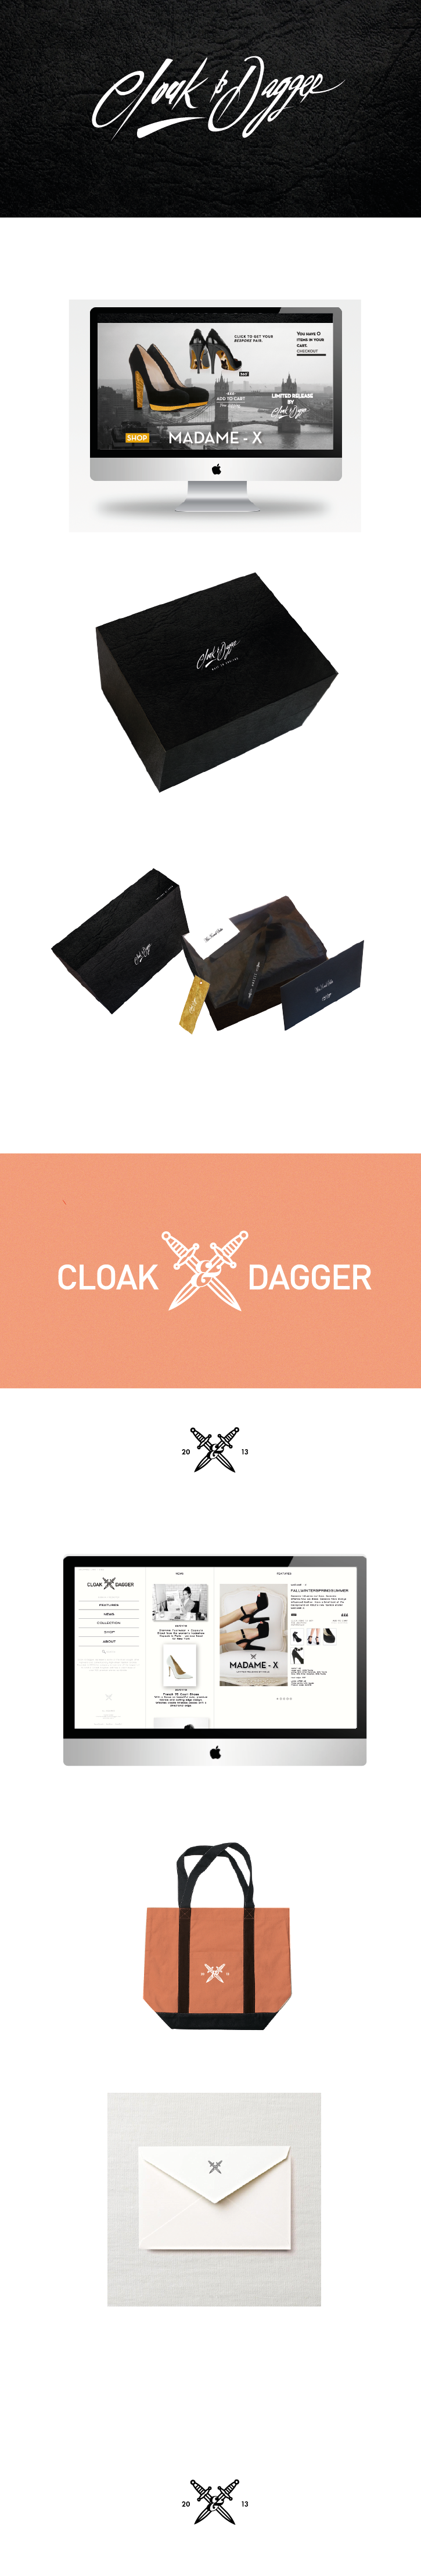 Cloak & Dagger KBLE sable rebranding shoes womens sexy London